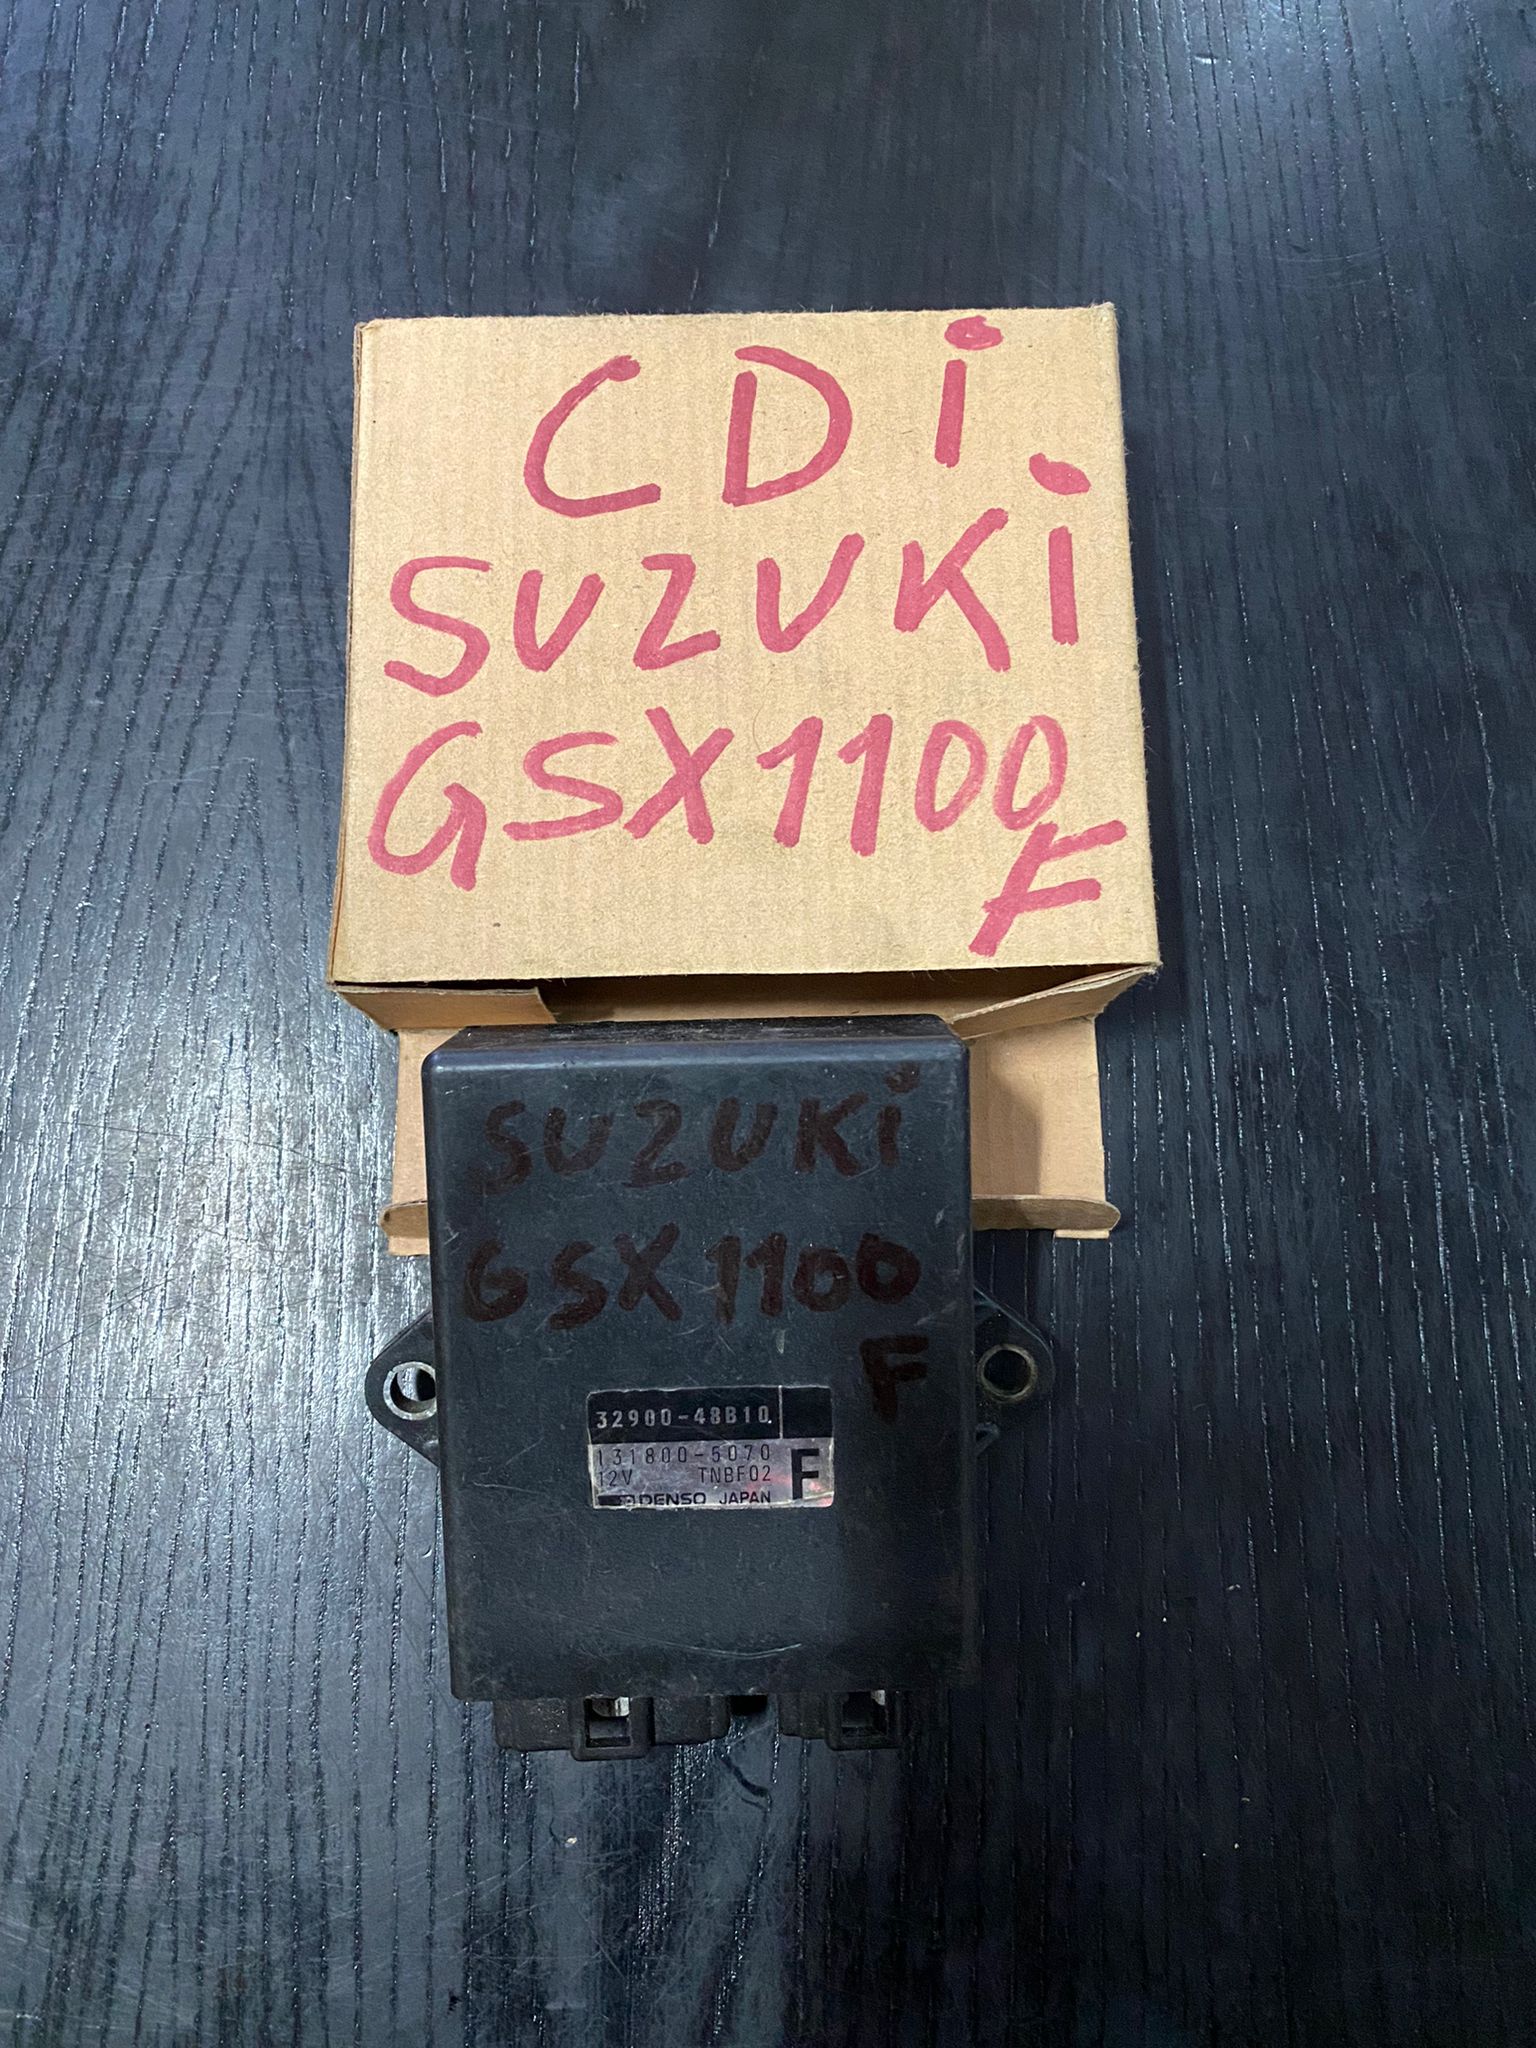 CDI Suzuki GSX1100F